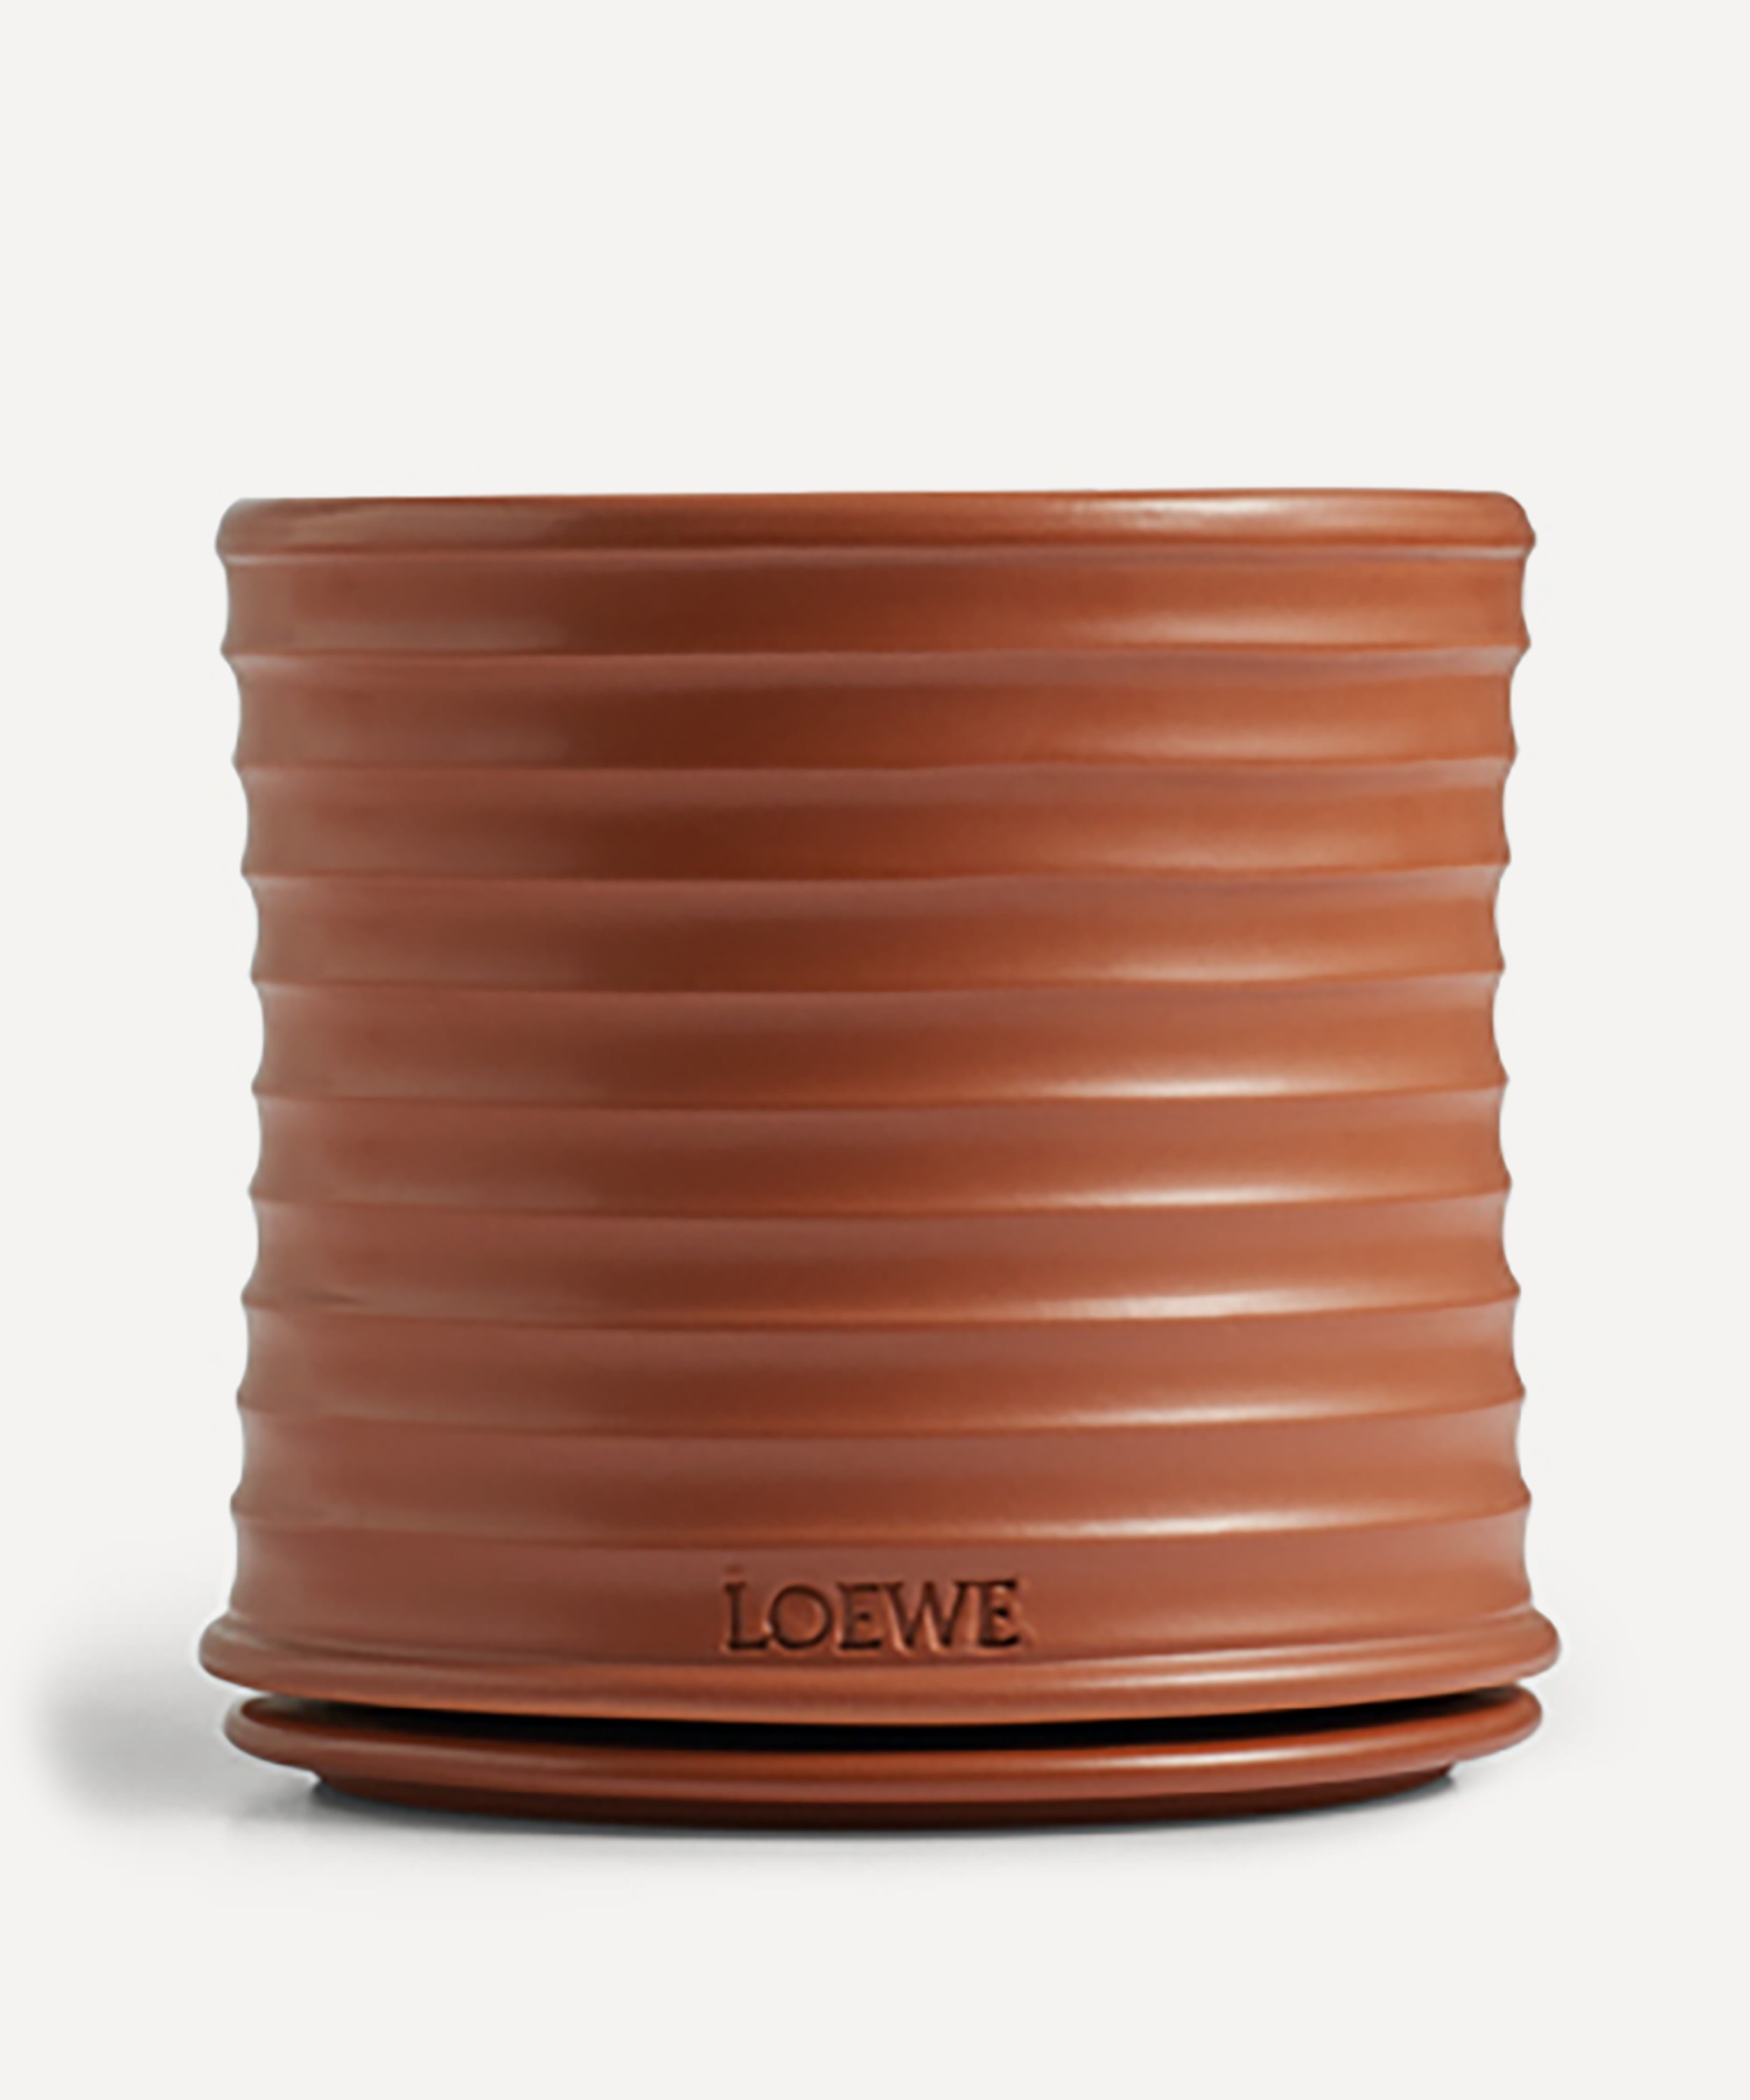 Loewe - Candle Lid Medium image number 5